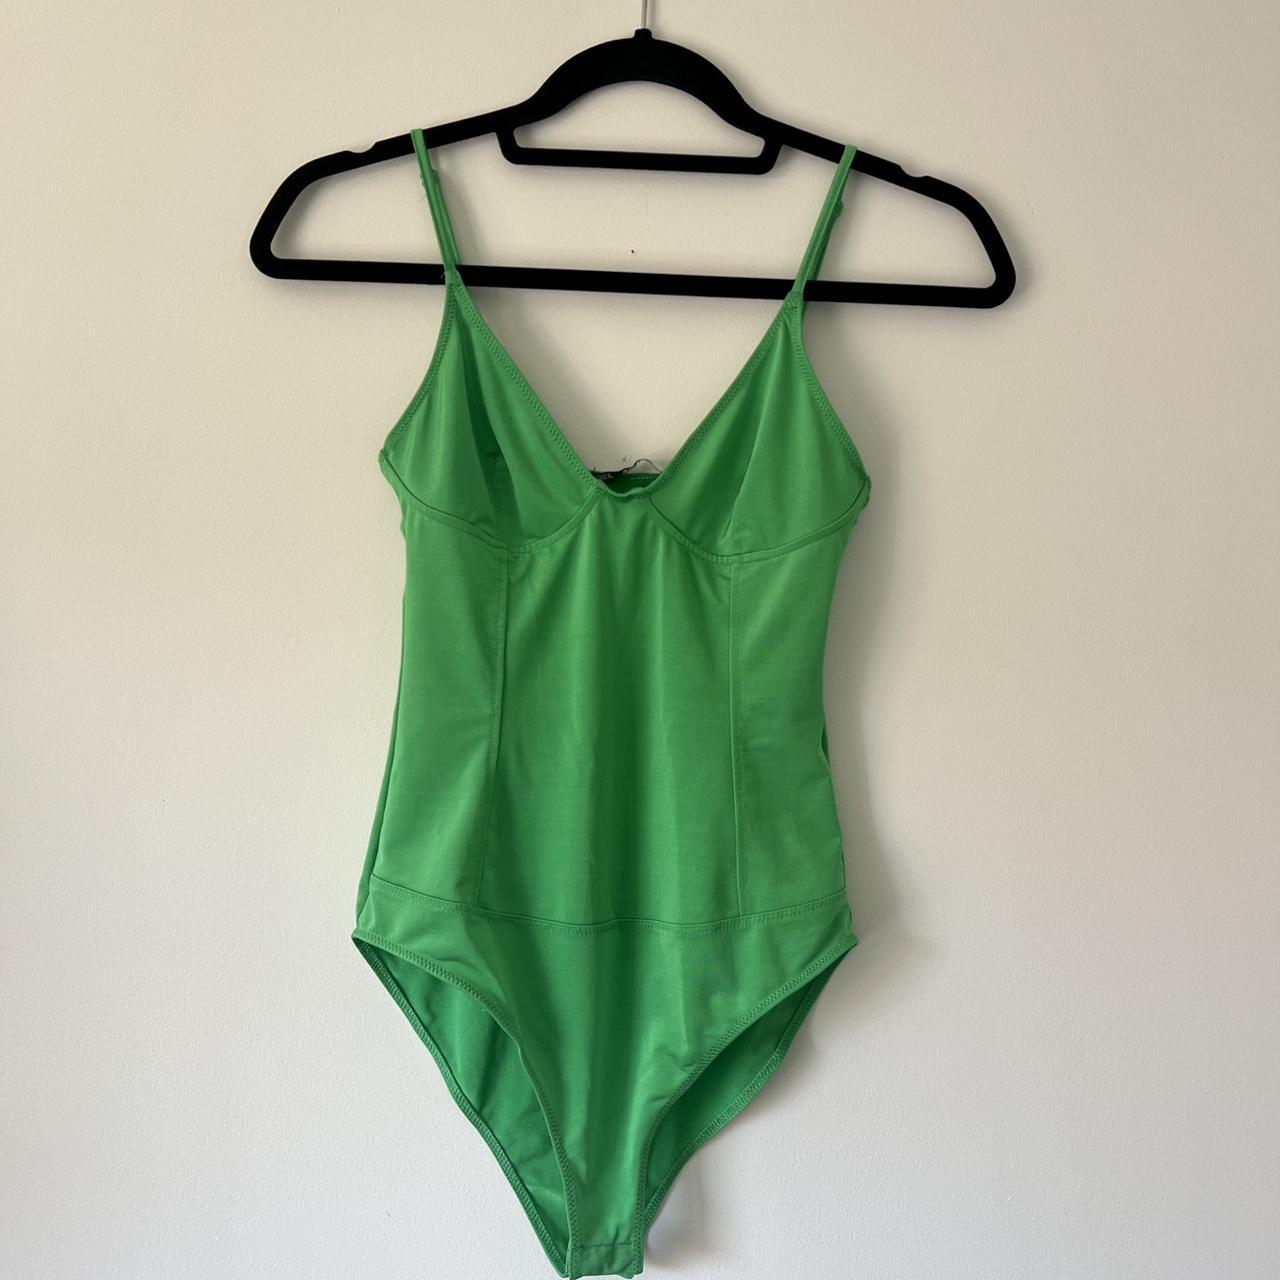 Fun green corset style bodysuit! Can easily be